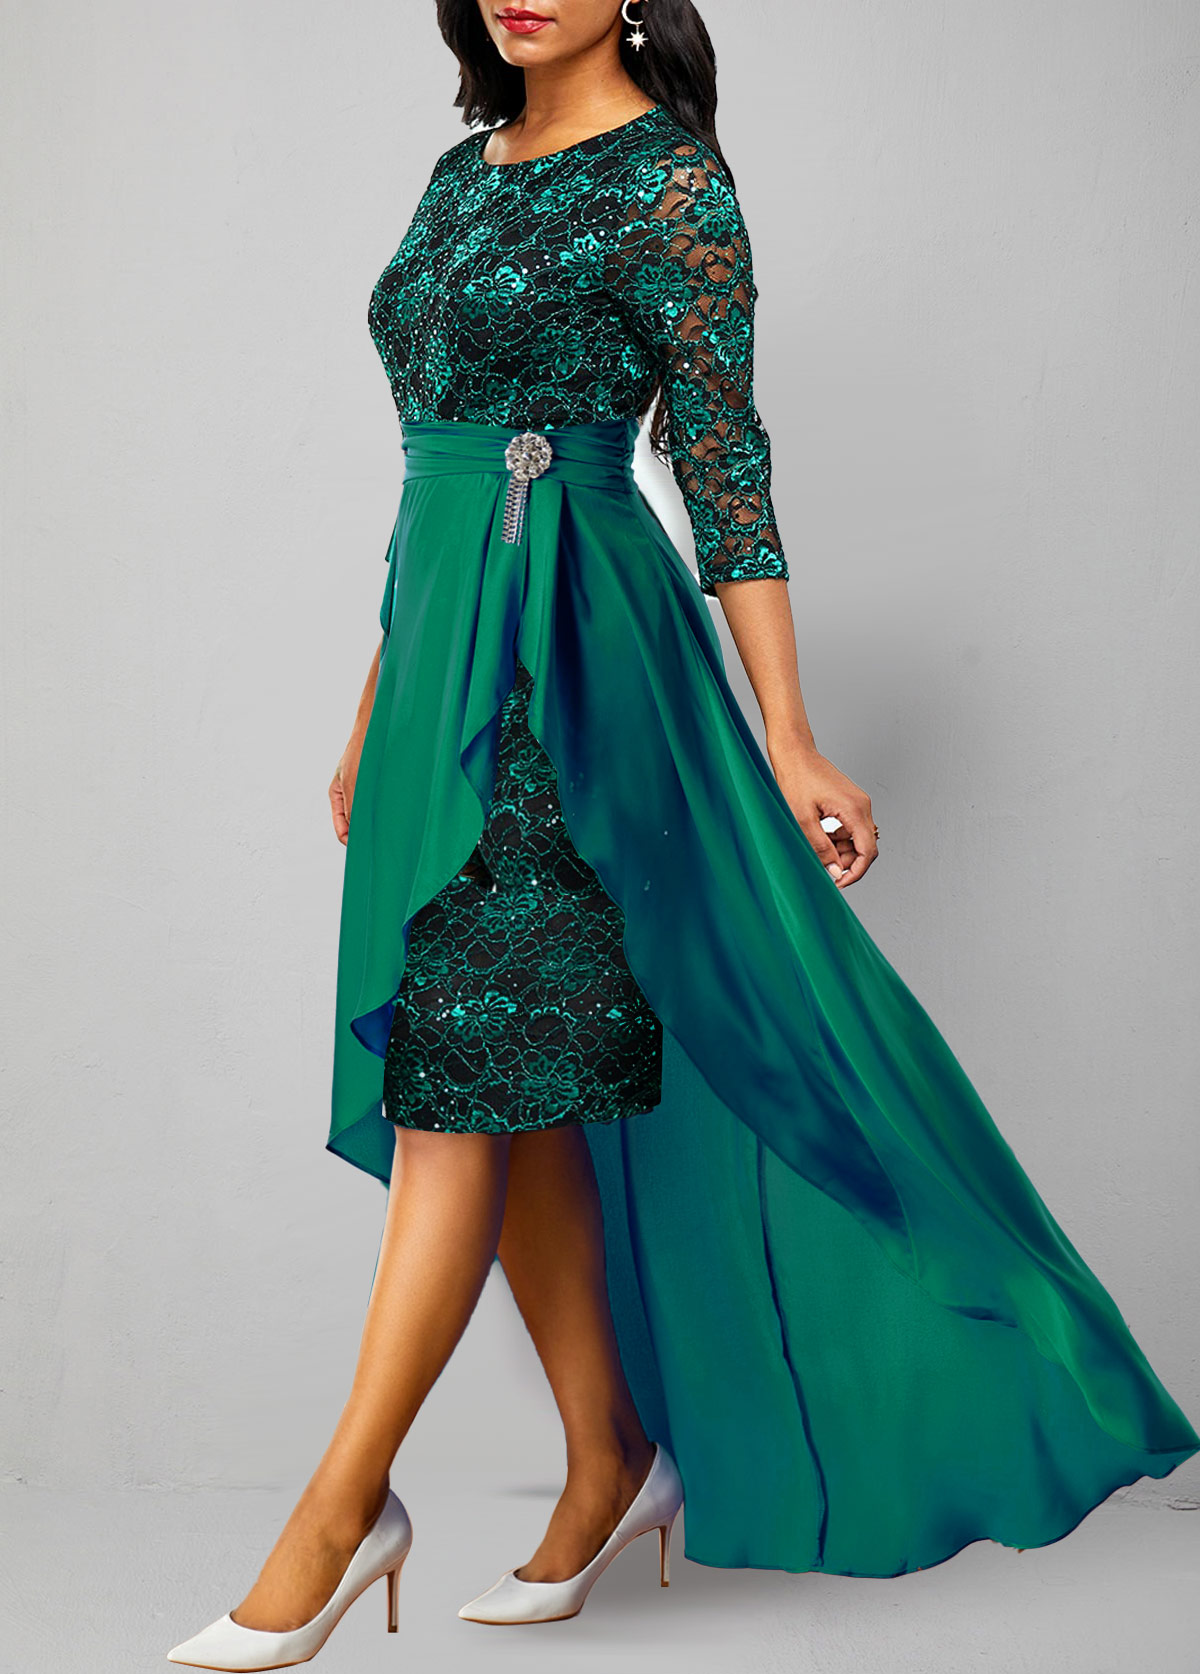 ROTITA Lace Patchwork Turquoise 3/4 Sleeve Dress | Rotita.com - USD $44.98